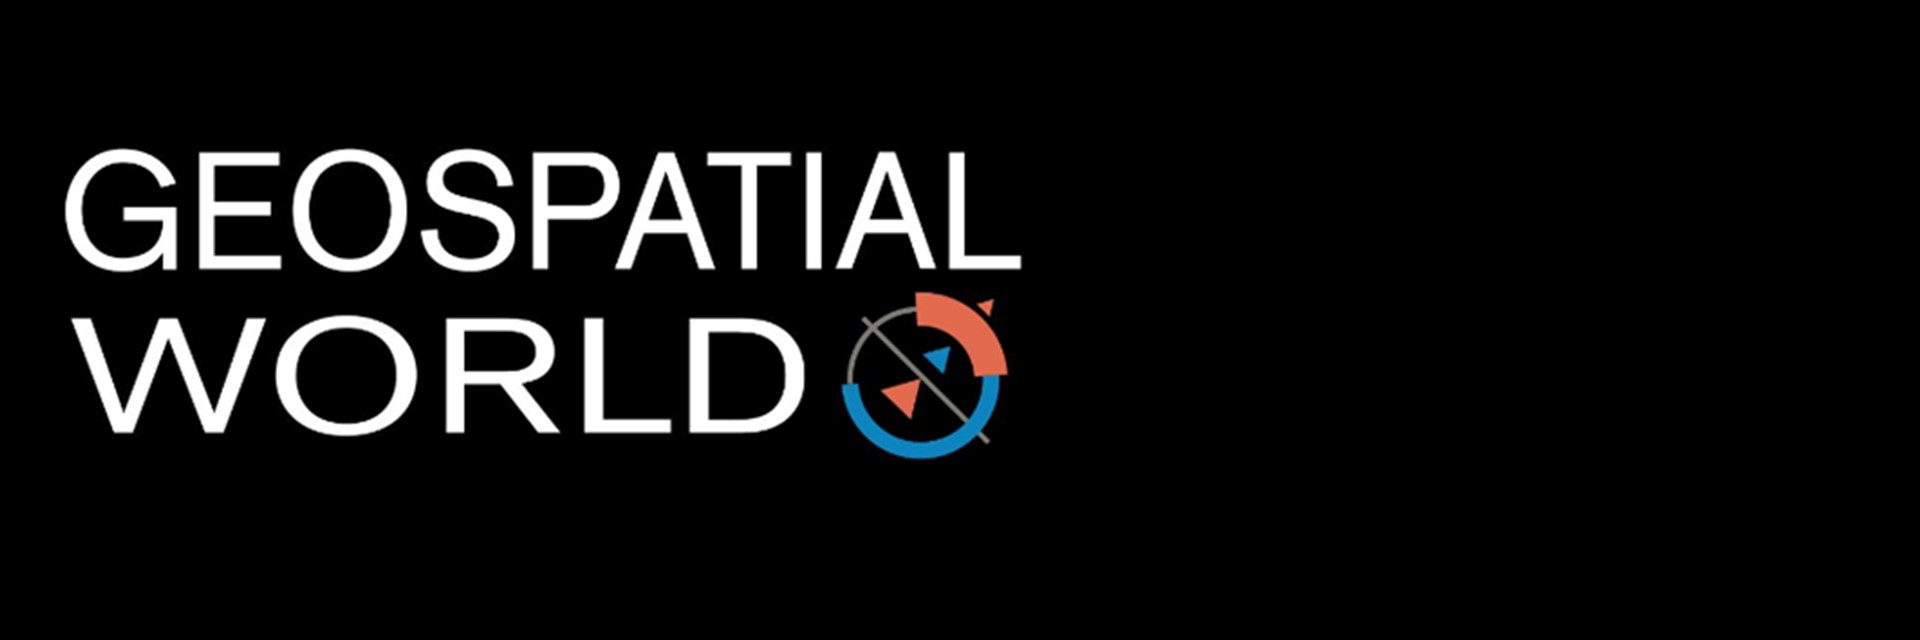 https://chcnav.com/uploads/Geospatial-world-logo.jpg